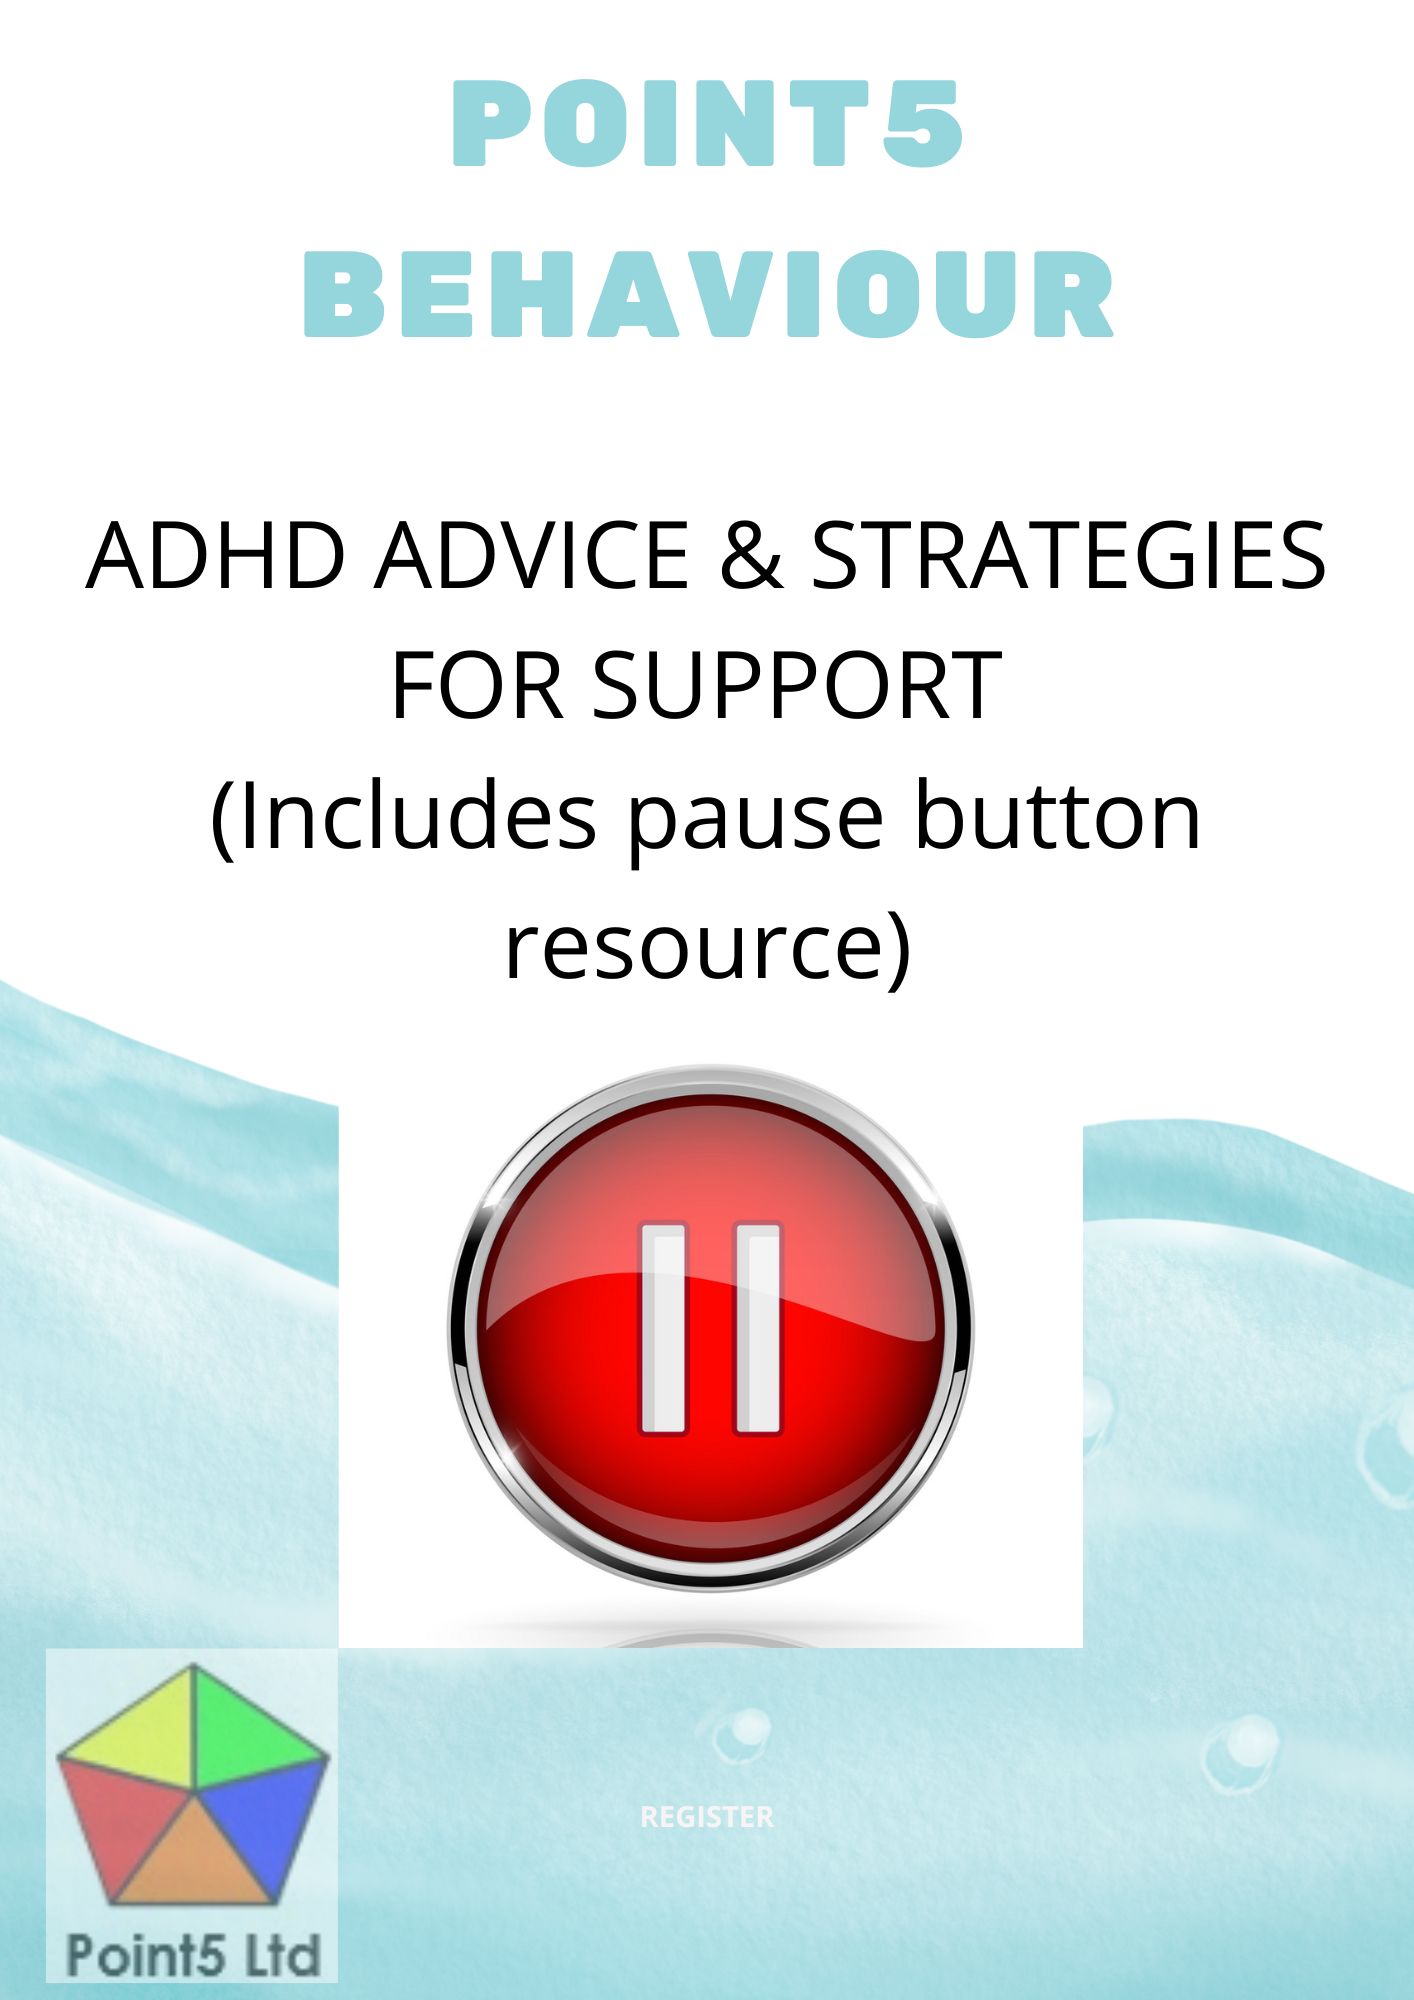 Point5 Behaviour ADHD Advice, Strategies & pause button resource